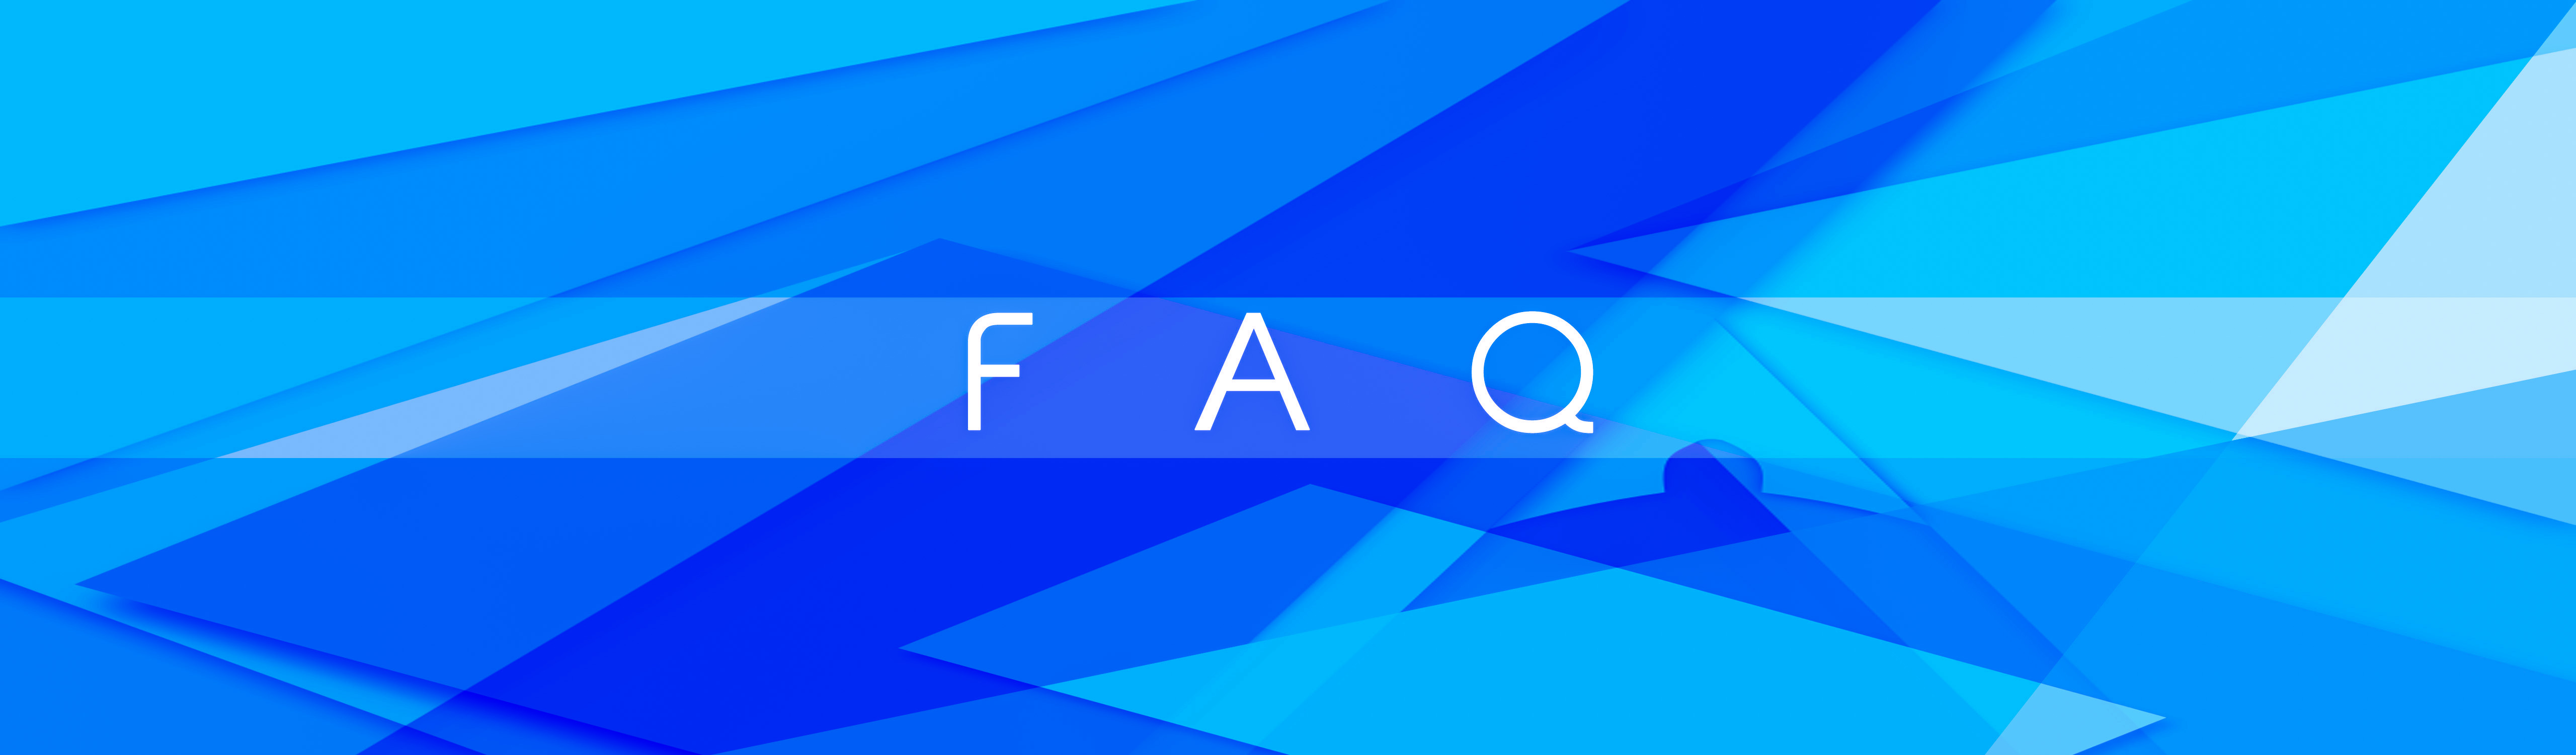 faq-banner-2